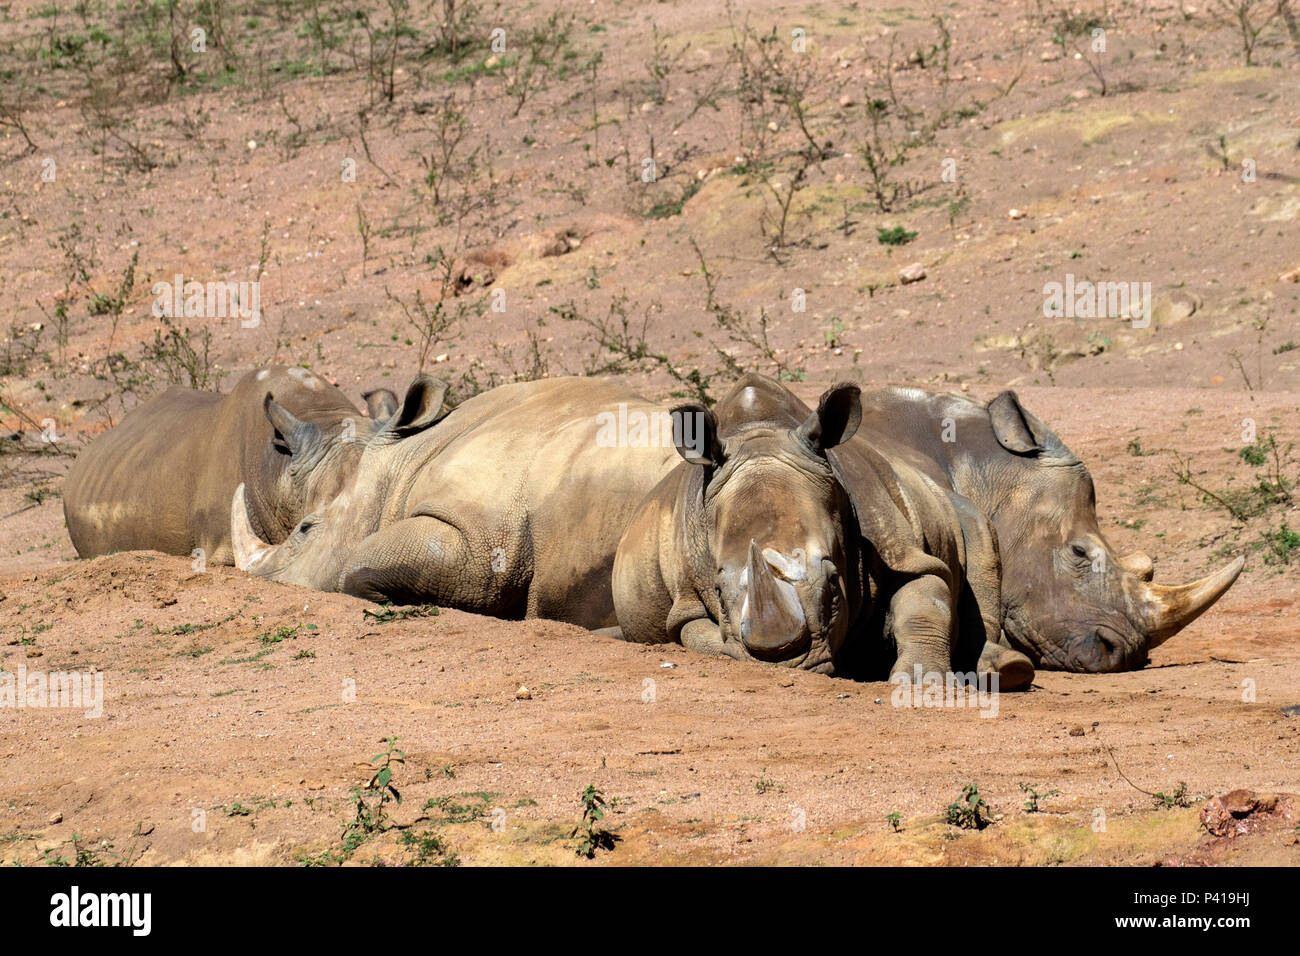 Rinoceronte; Rhinocerotidae; Fauna; Natureza; animal de grande porte; Africa; Zooparque; Itatiba; Sao Paulo; Brasil, dati da foto 3 de junho 2017 Foto Stock